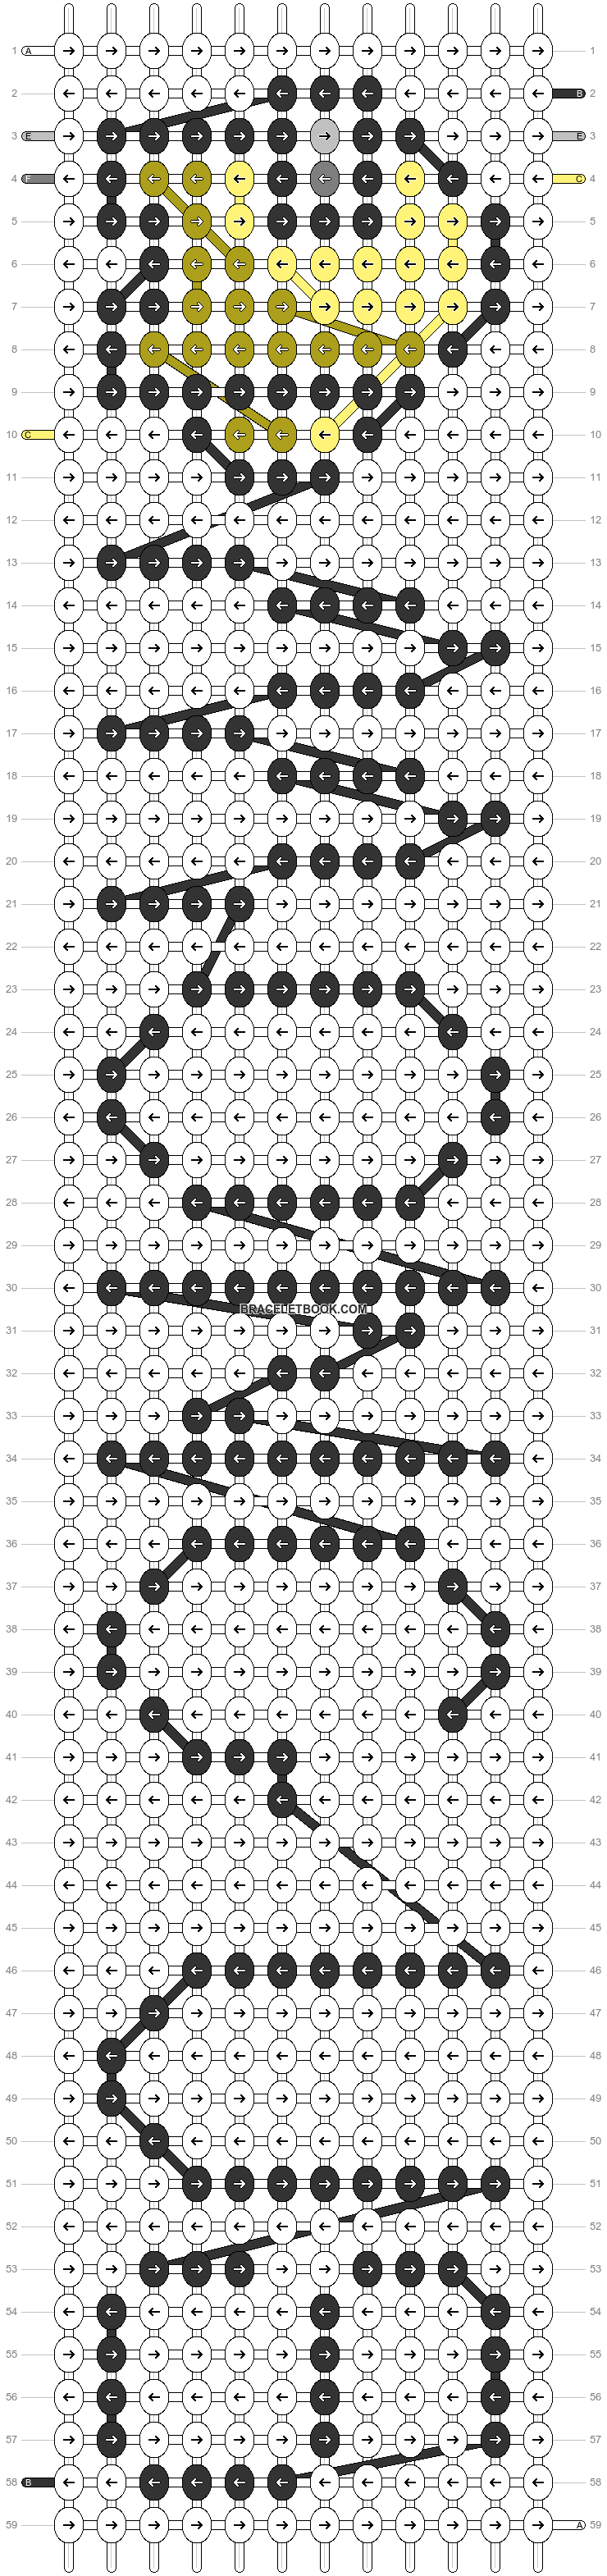 Alpha pattern #55655 variation #96792 pattern